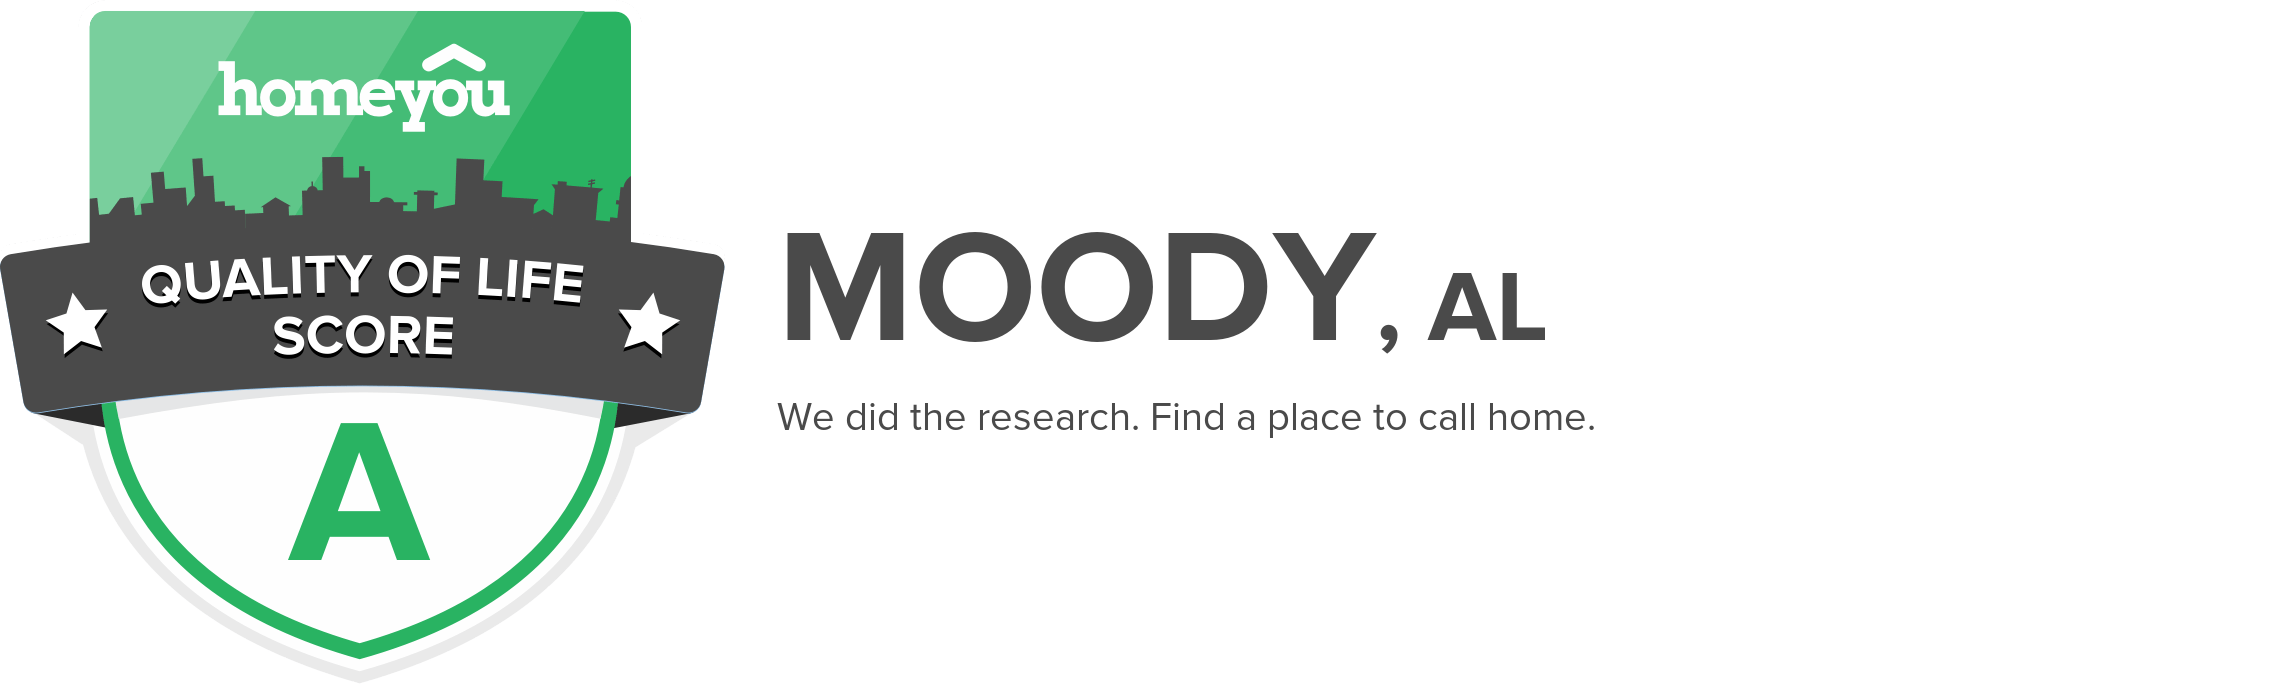 Moody, AL